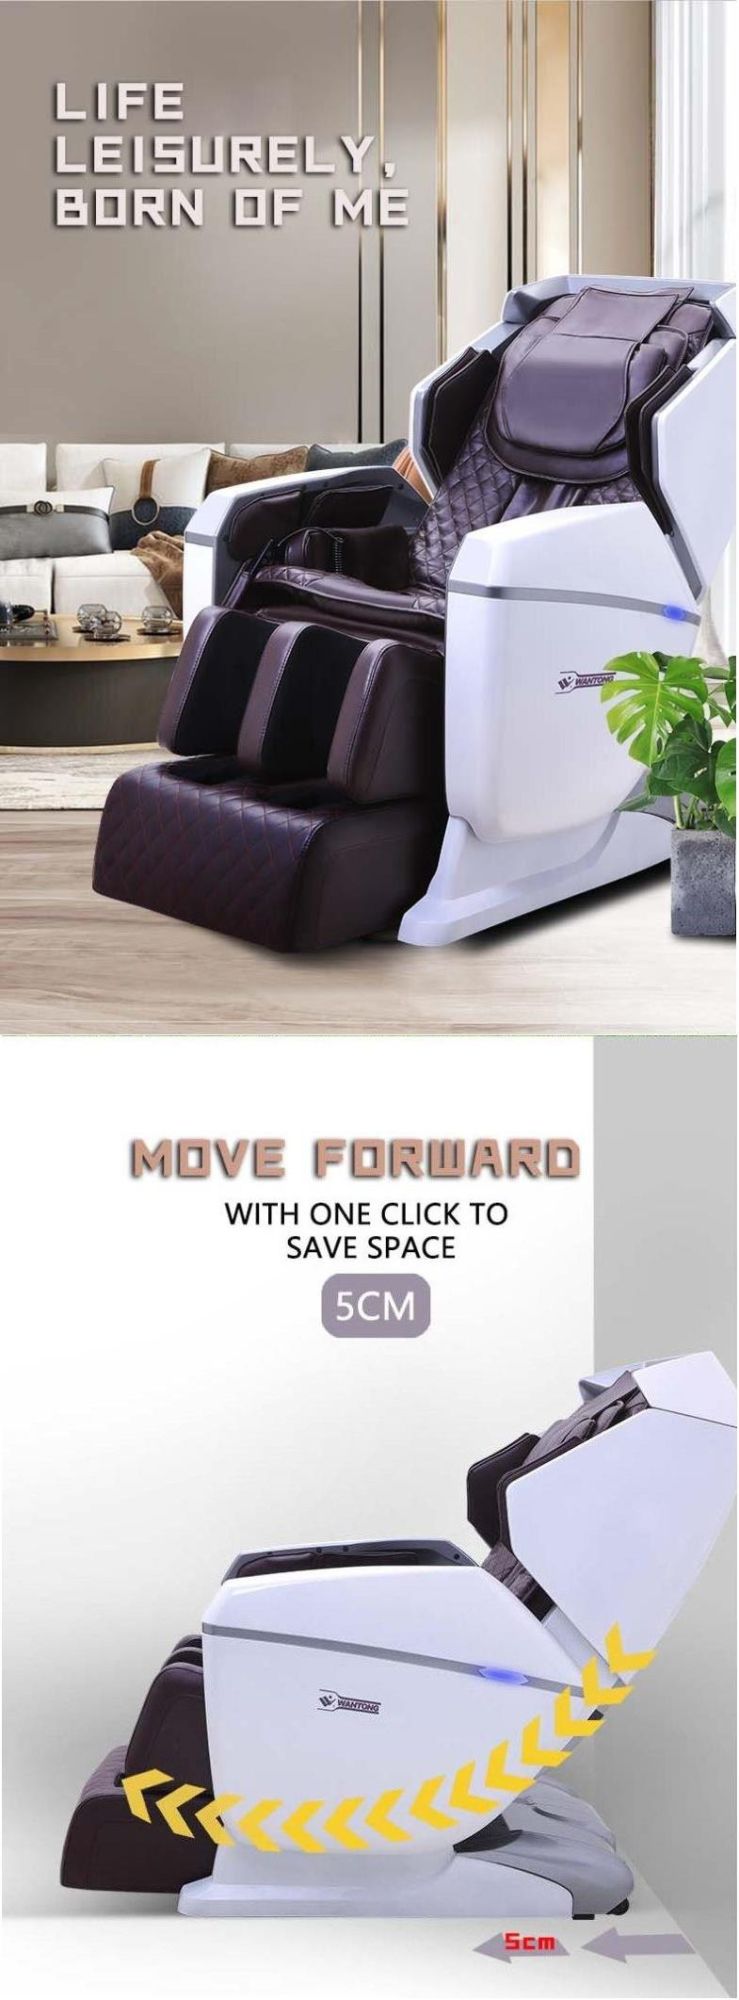 Professional 4D Rocking Shiatsu L Shape Zero Gravity Full Body Massage Chair